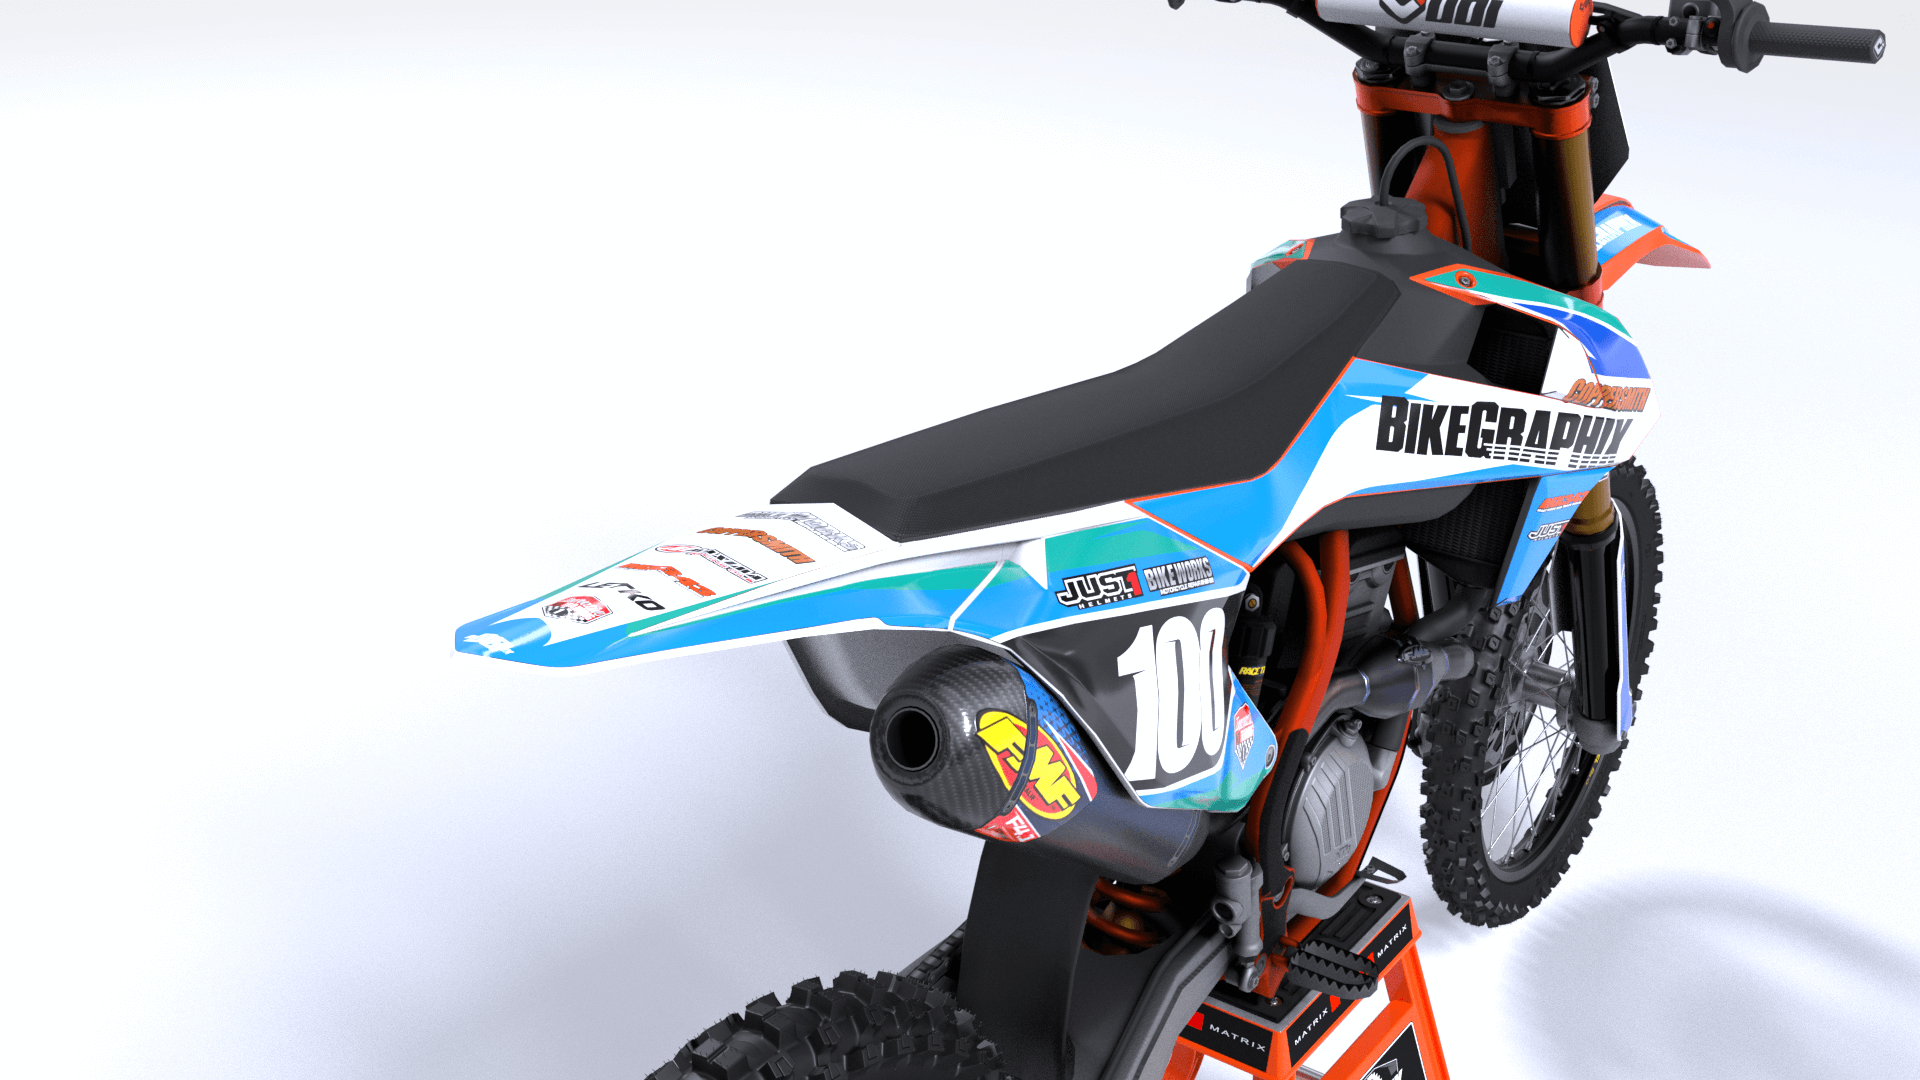  KTM  Blitz Semi Custom Motocross  Graphics  BikeGraphix